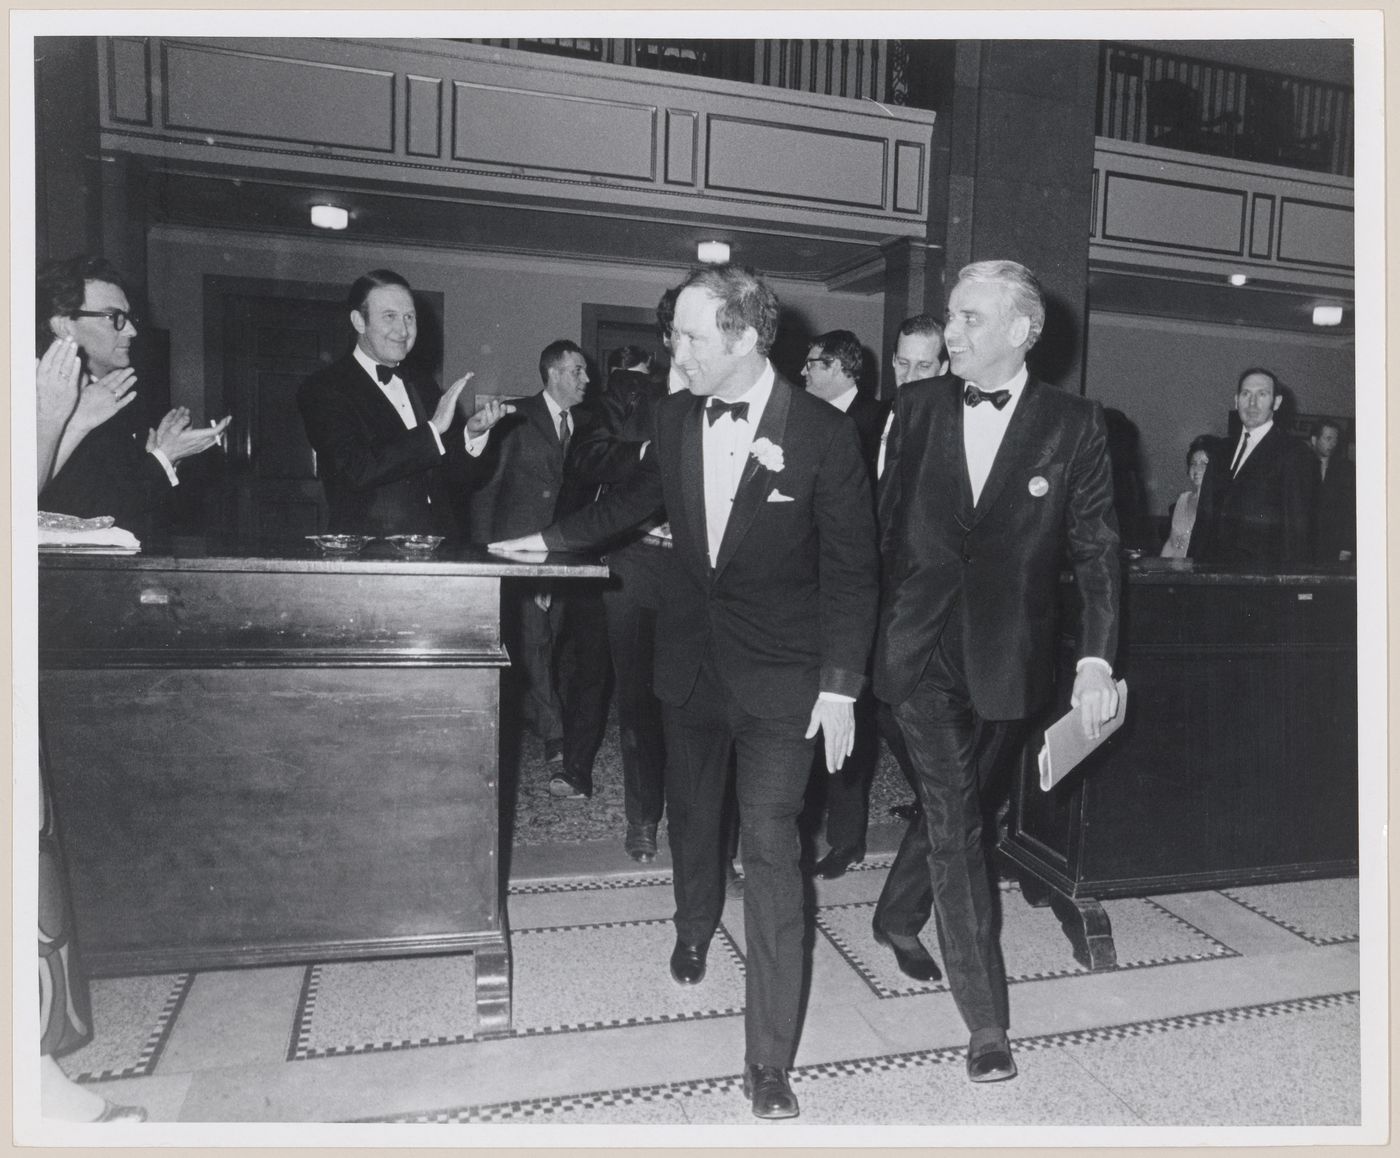 Parkin and Prime Minister Pierre Elliot Trudeau walking together at dinner event